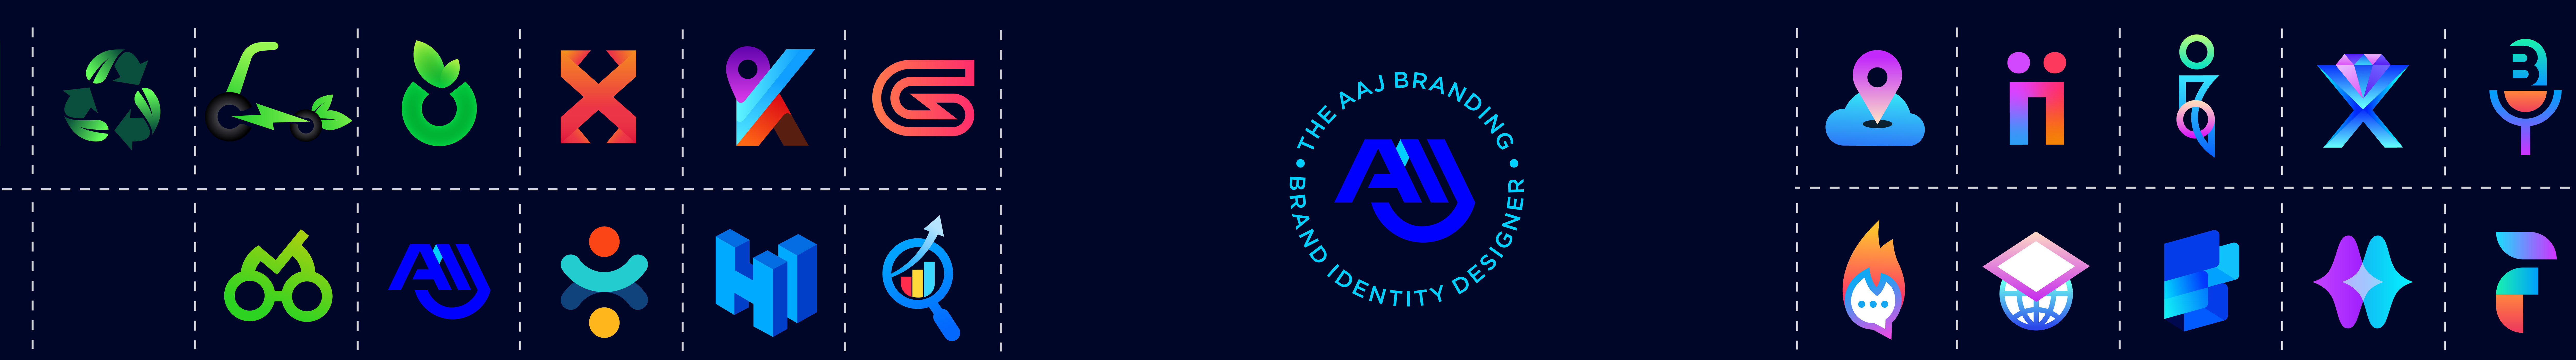 The AAJ Brandings profilbanner